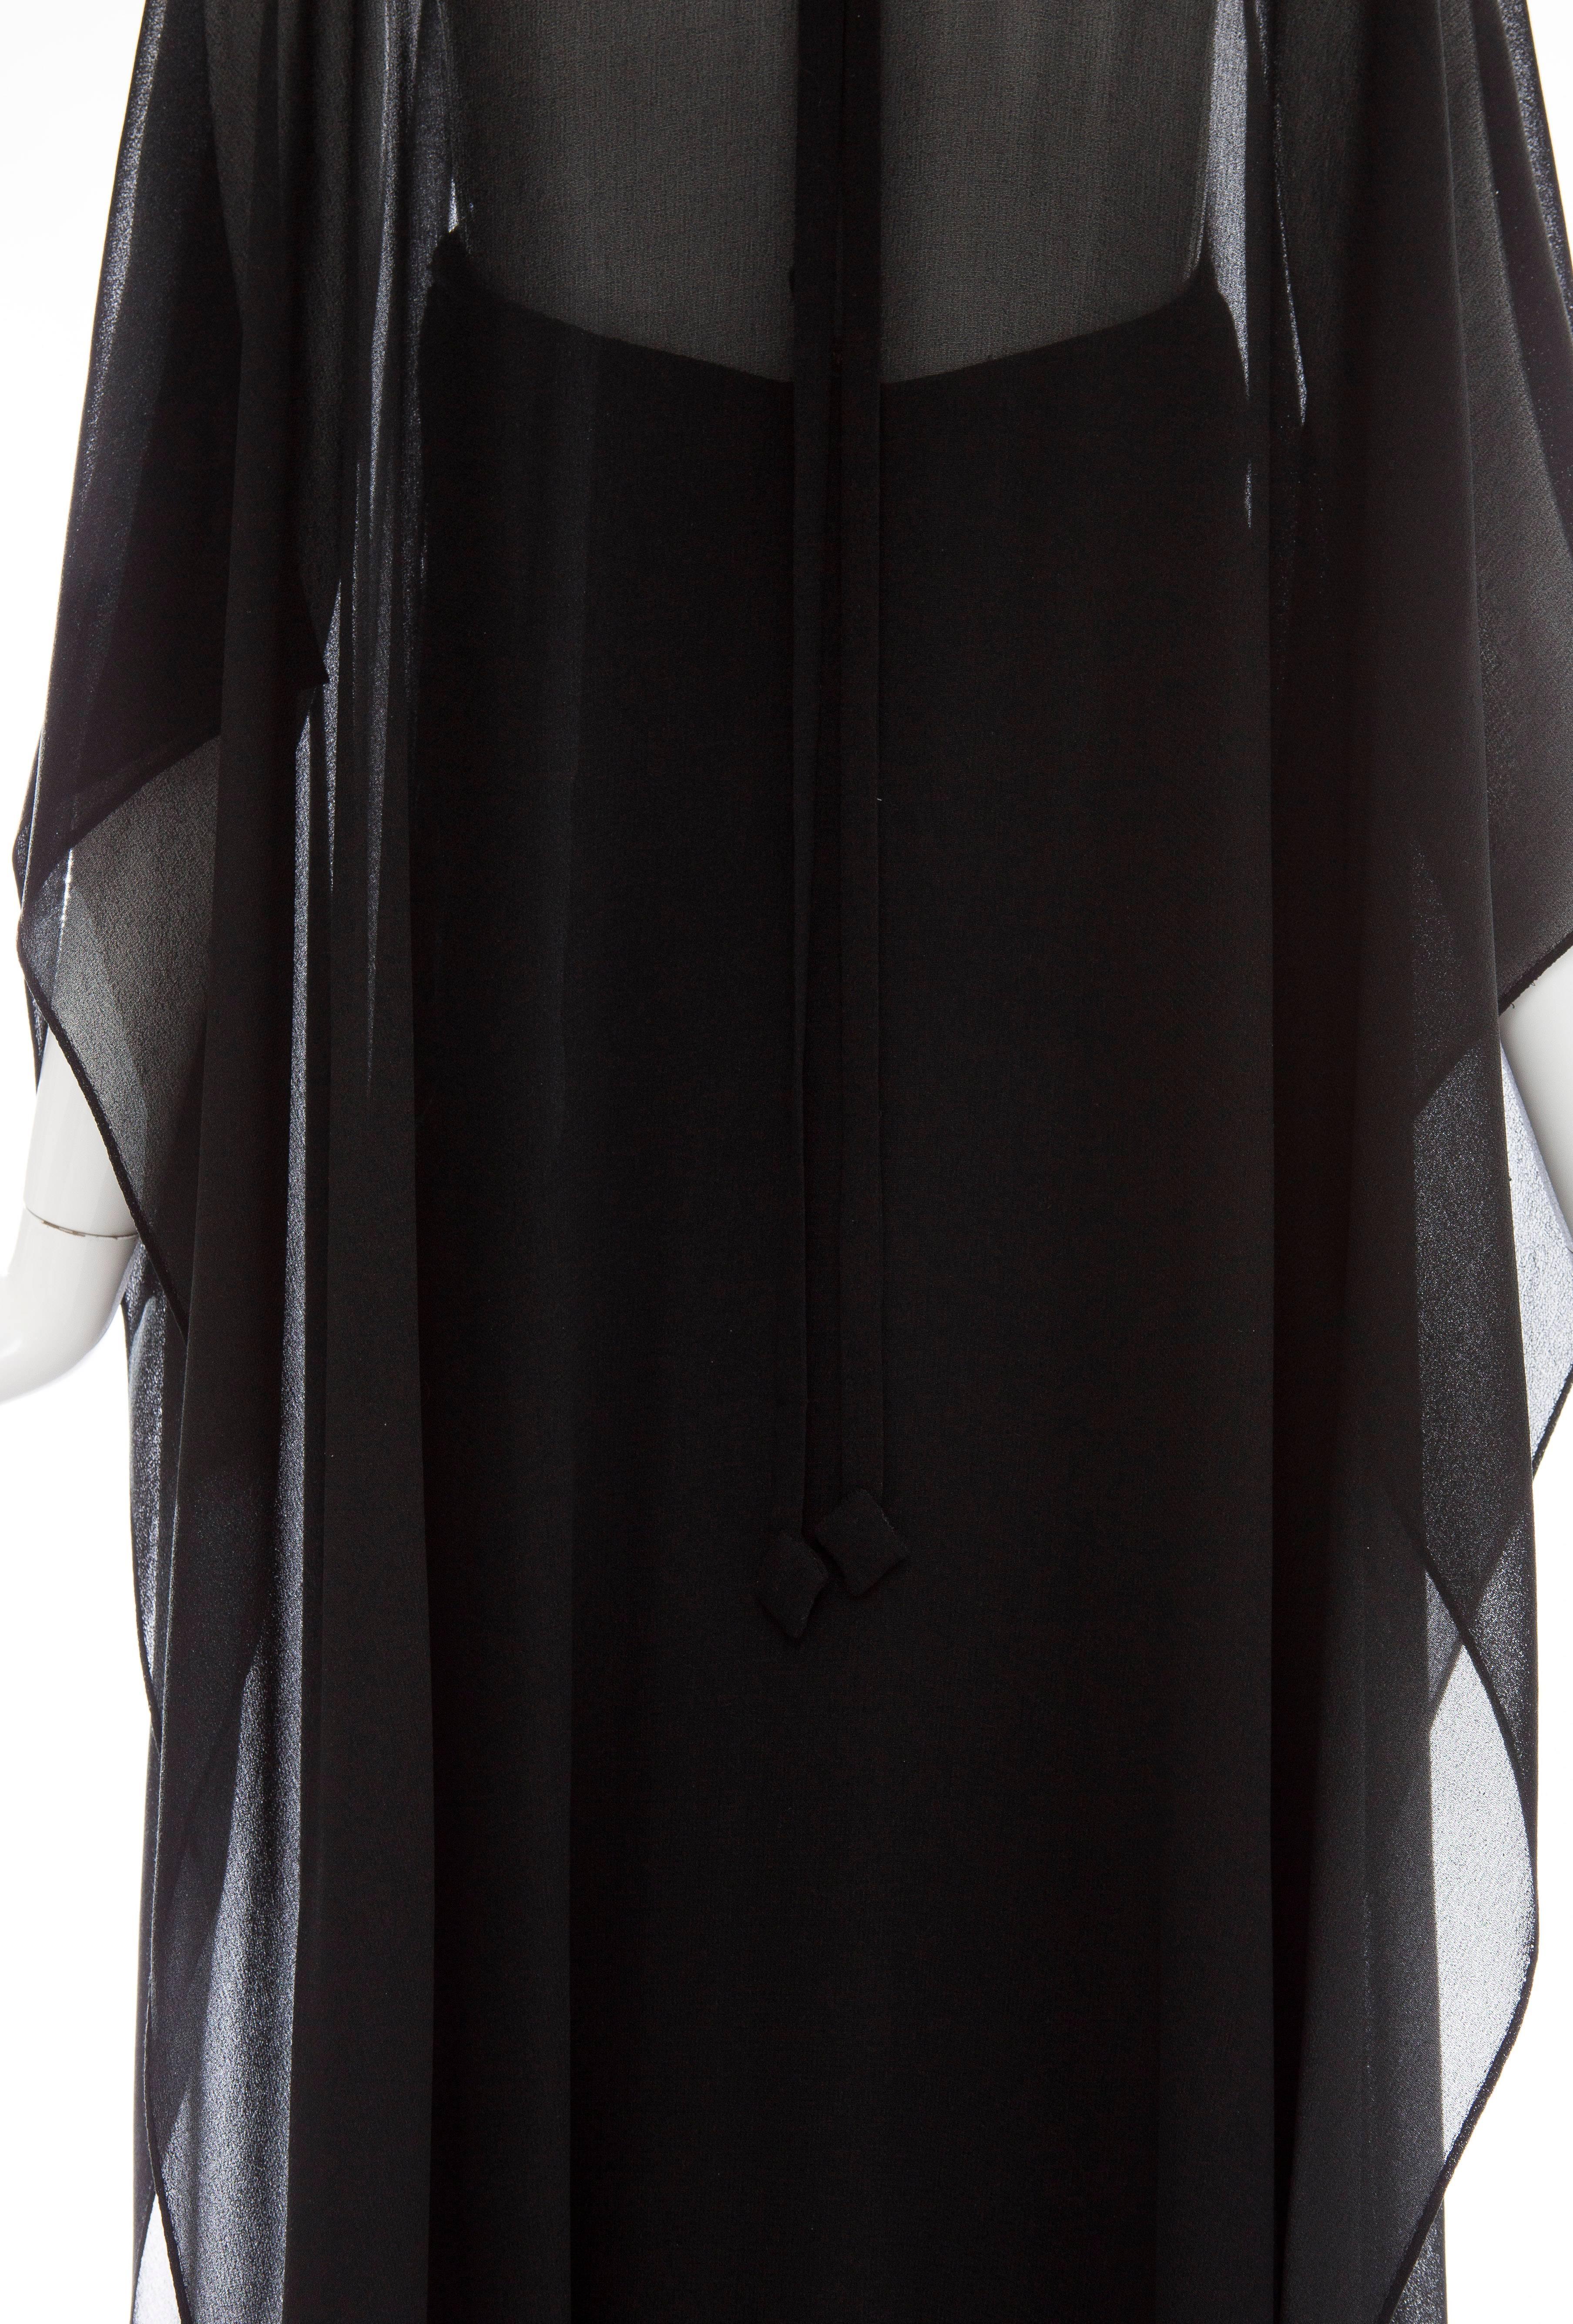 Bill Blass Black Nun's Cloth Strapless Evening Dress, Circa 1970's For Sale 5